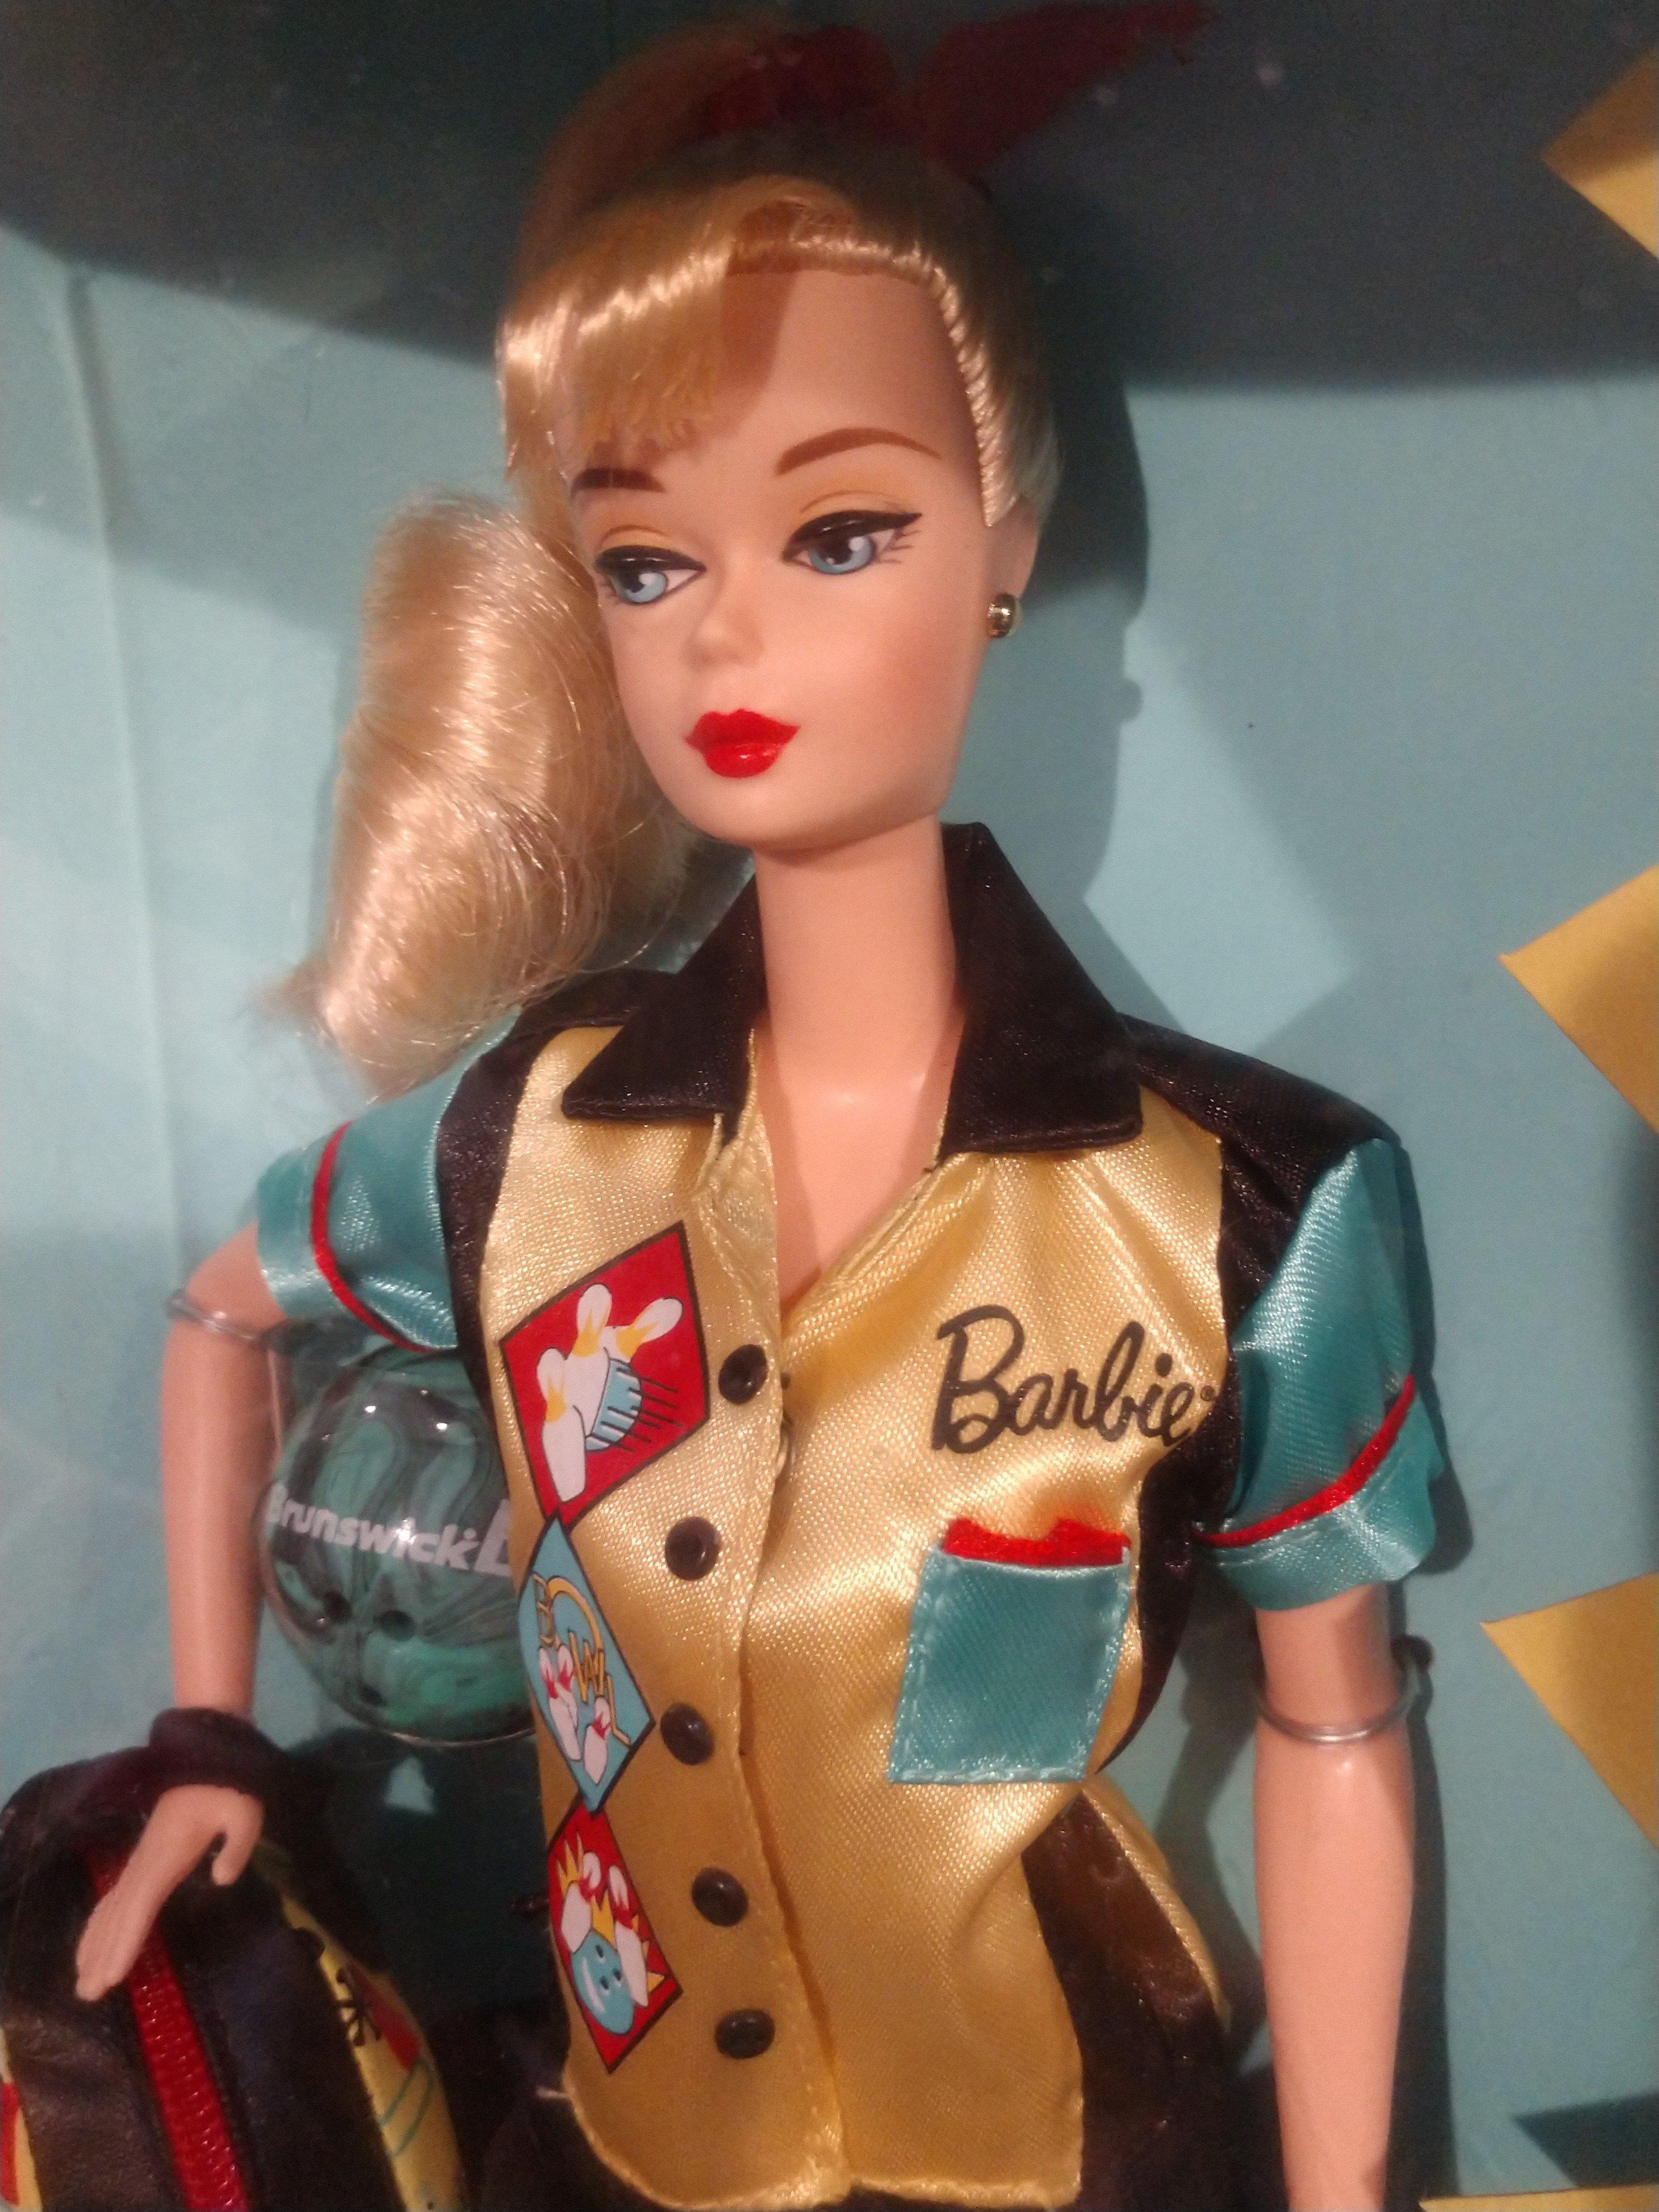 Nib! Collector Edition 1999 Bowling Champ Barbie W/ Accessories!